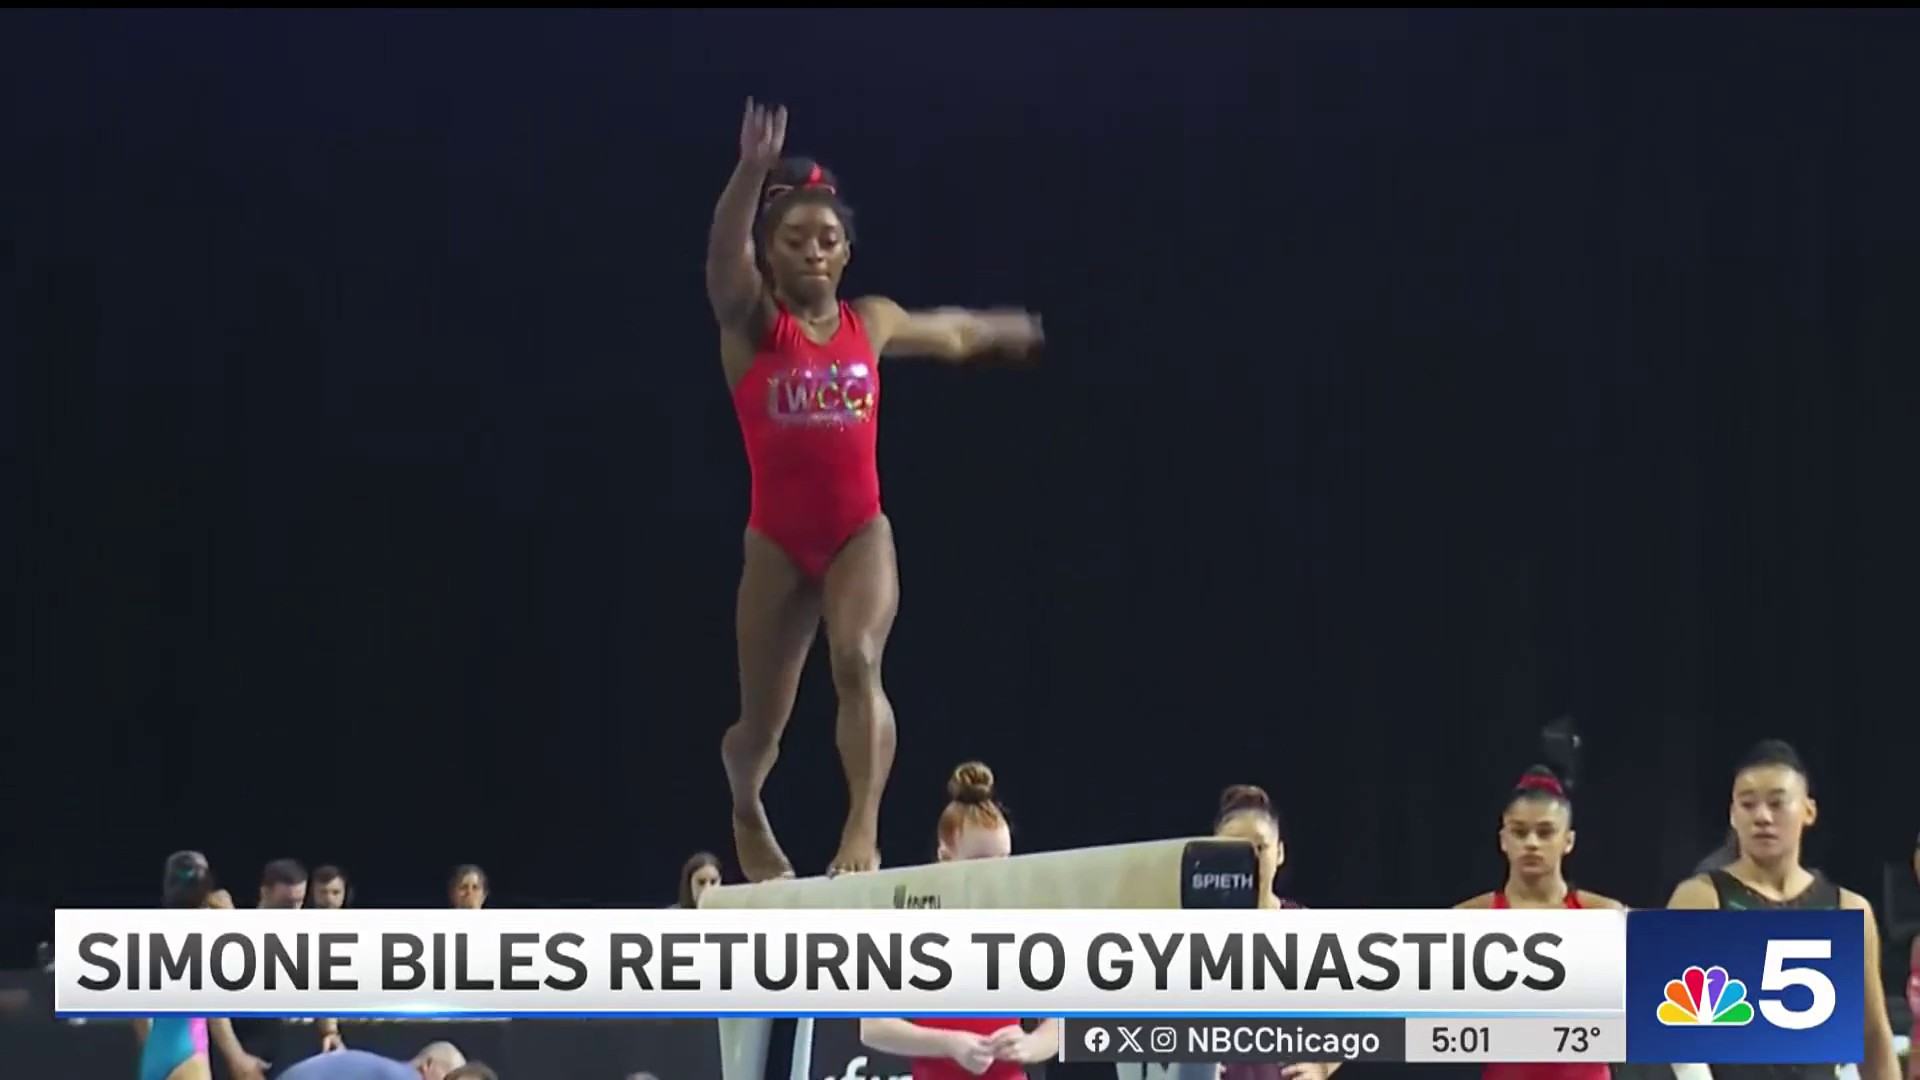 Simone Biles returns to competitive gymnastics in Hoffman Estates